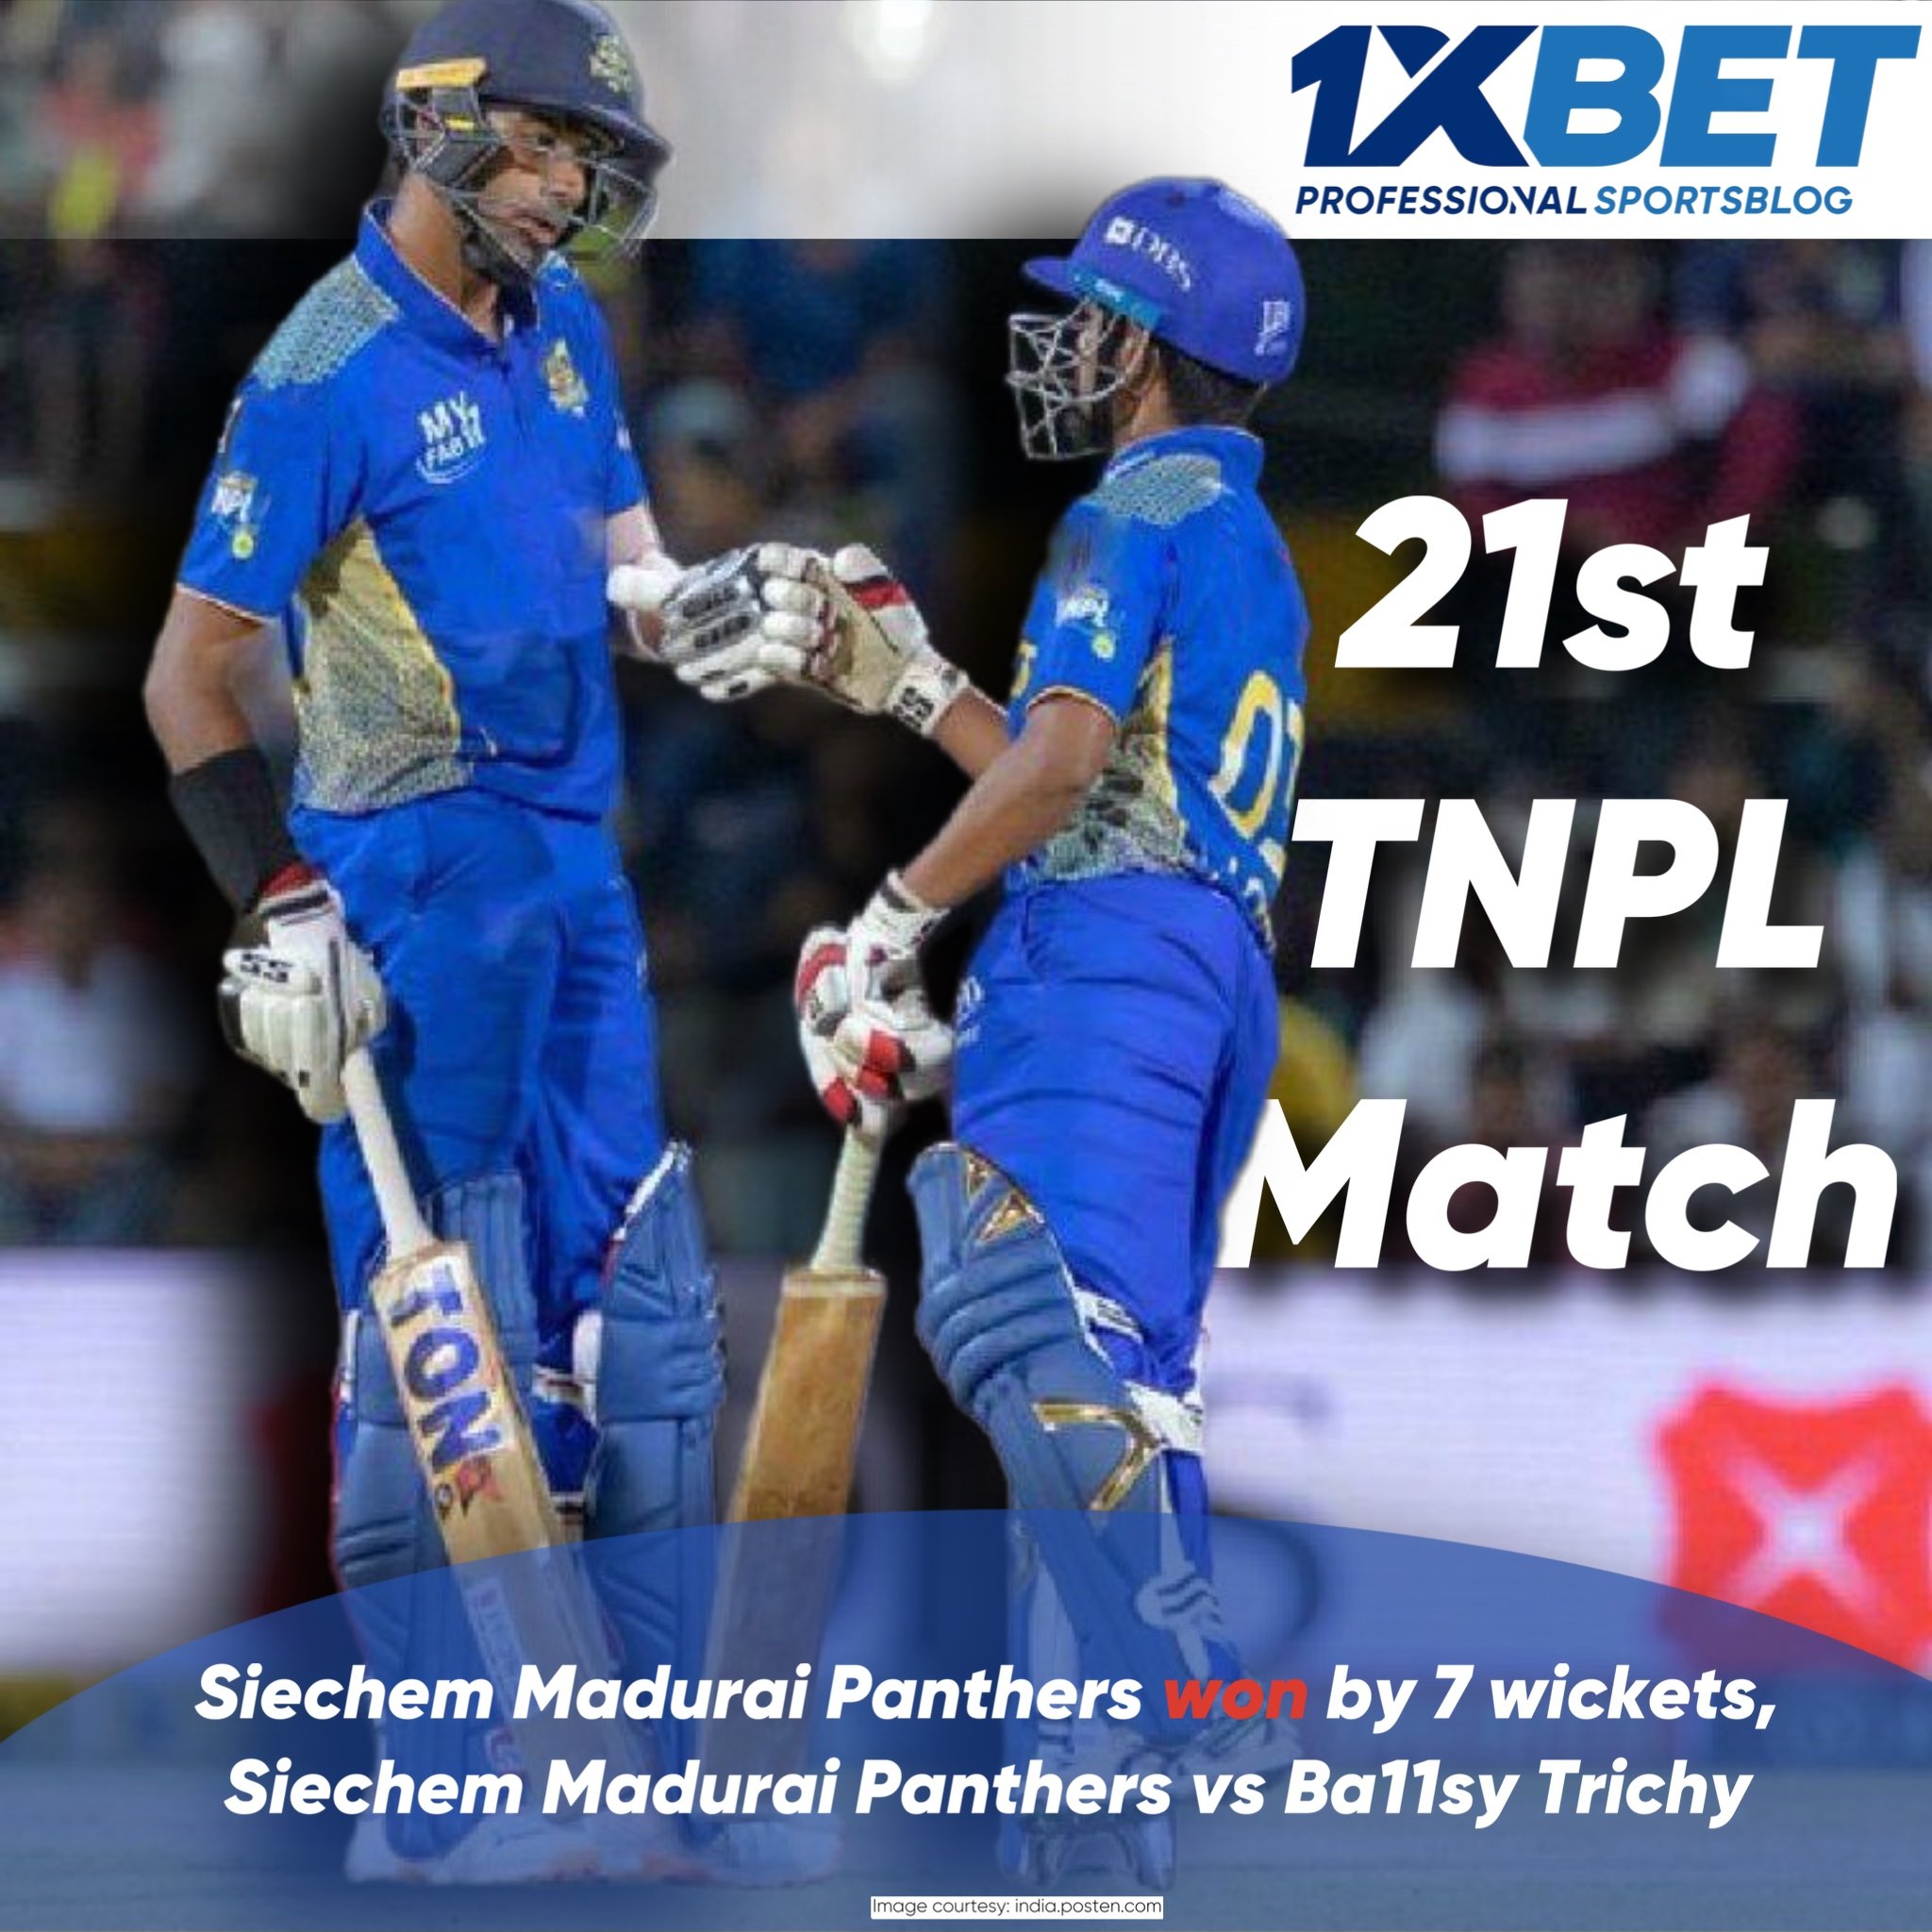 Siechem Madurai Panthers won by 7 wickets